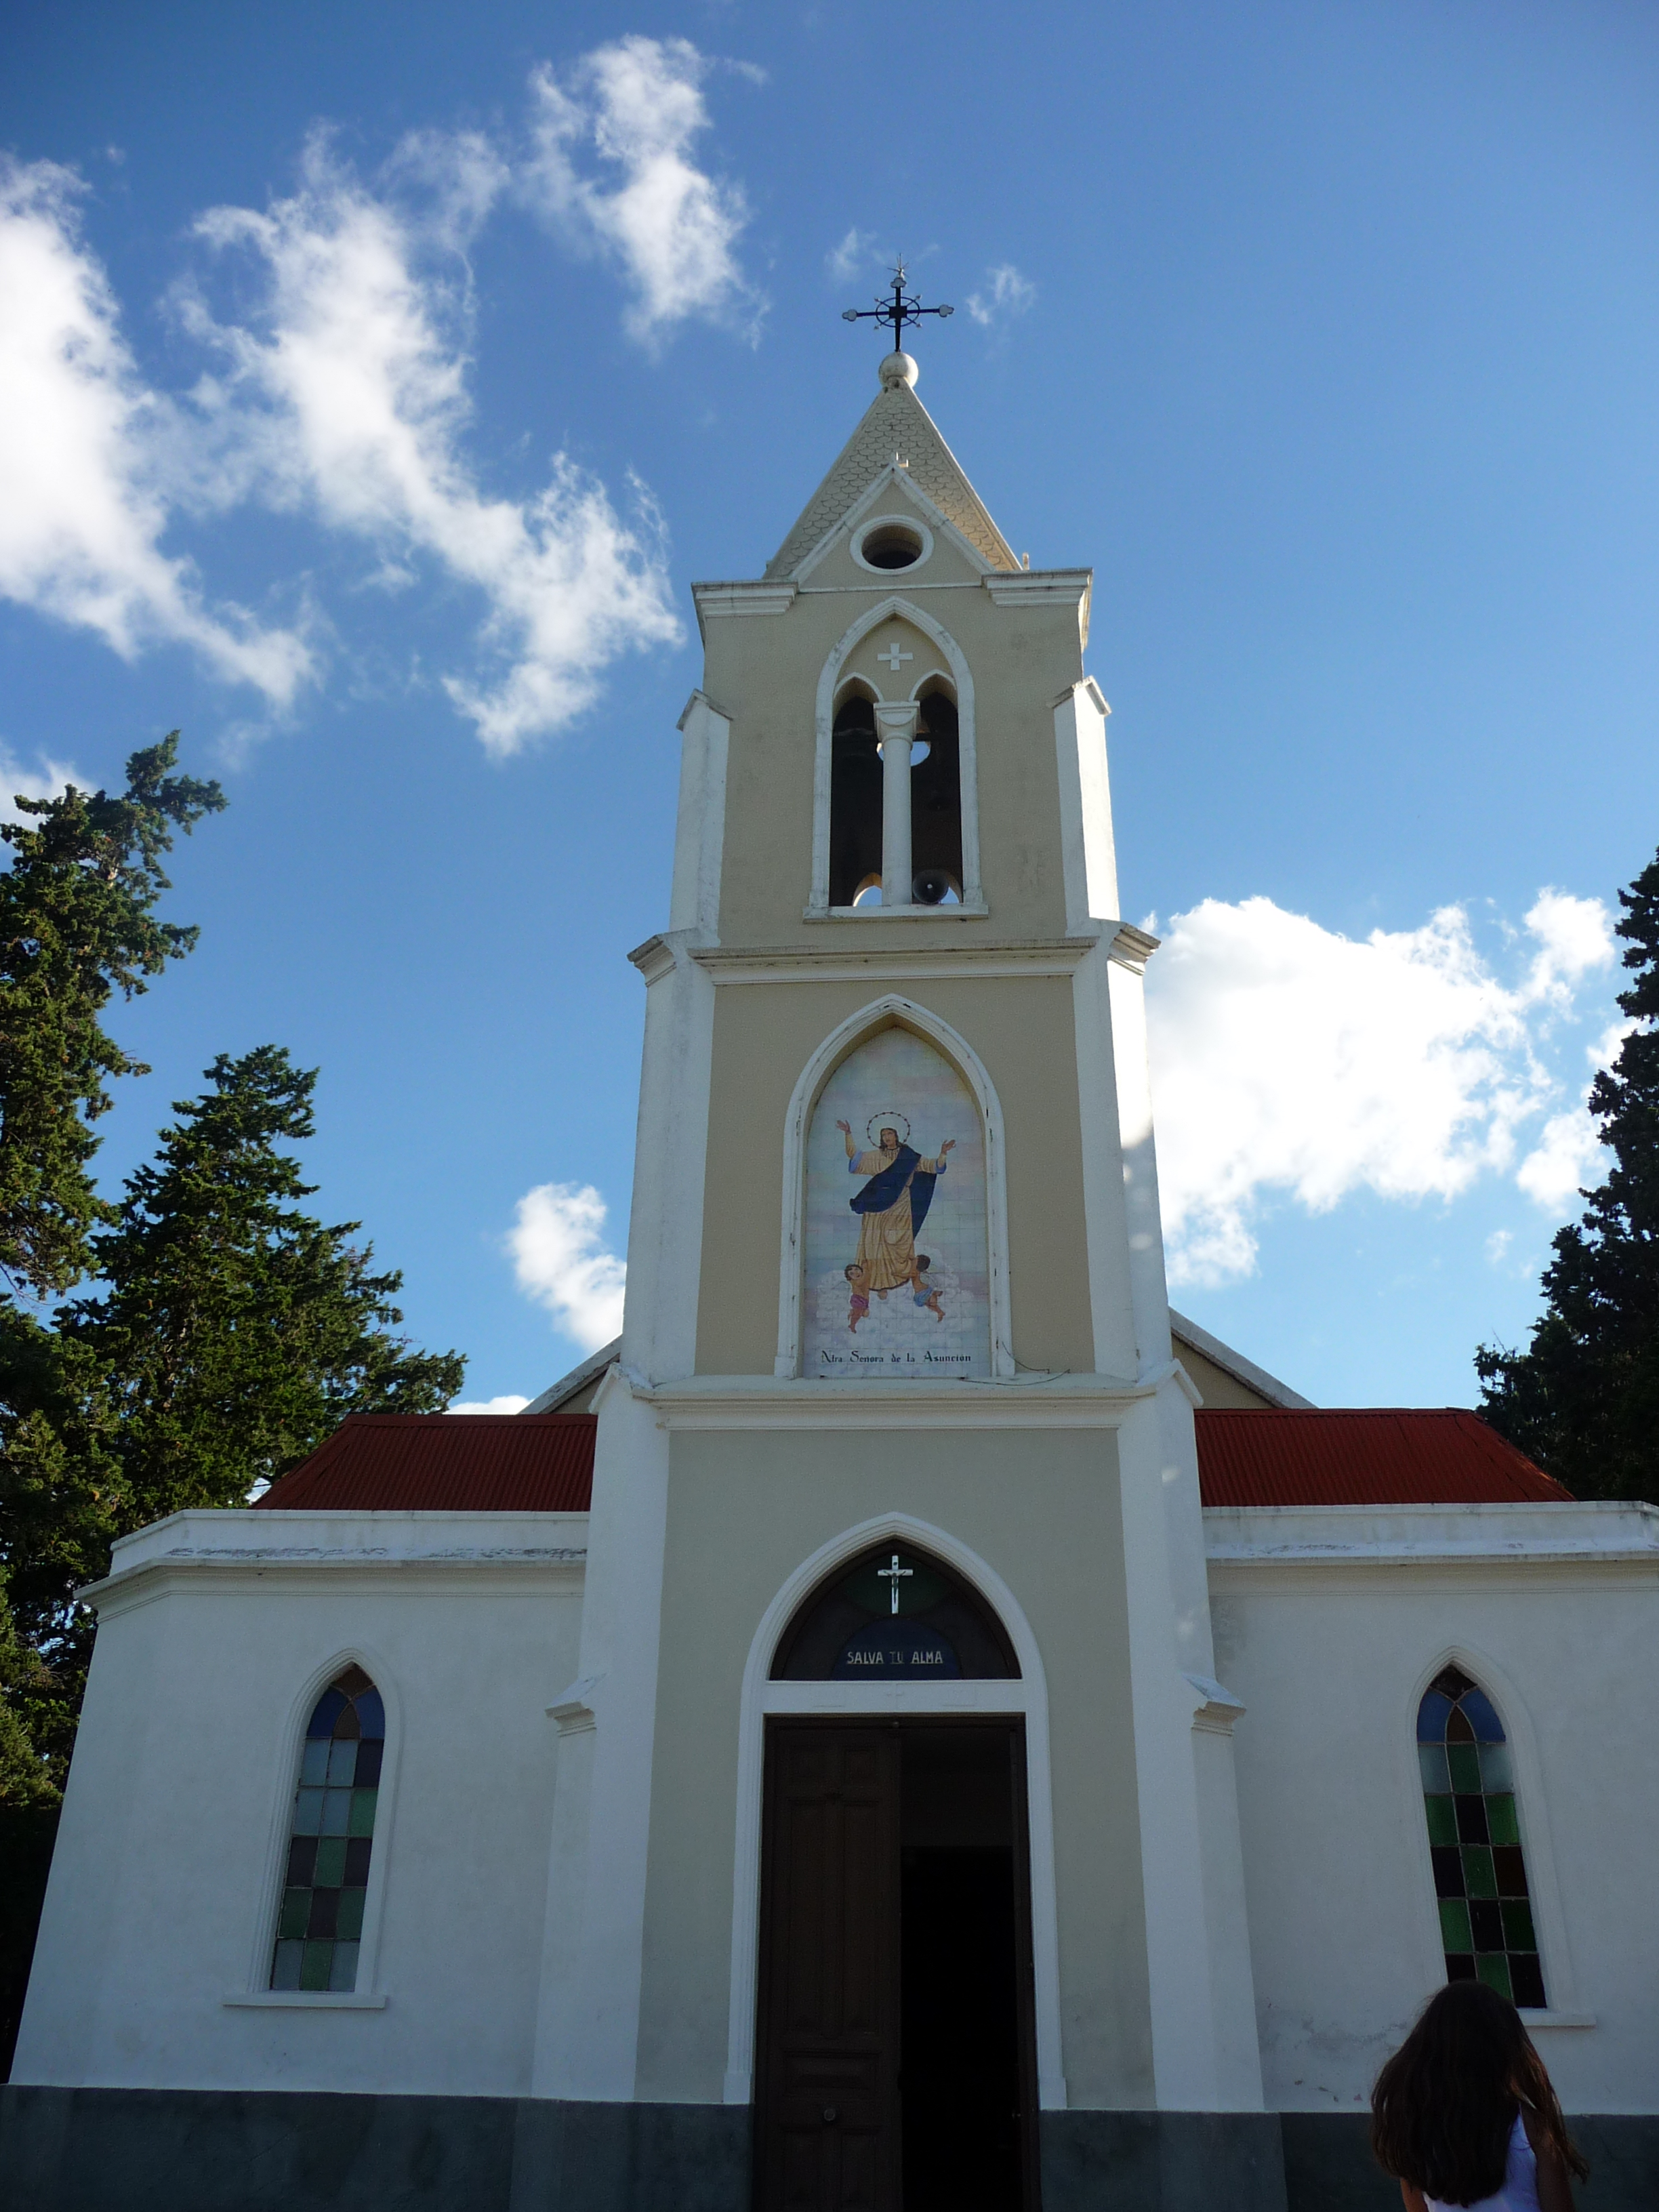 Catholic Church in Santa Maria. Source: Oscar Herrlein.